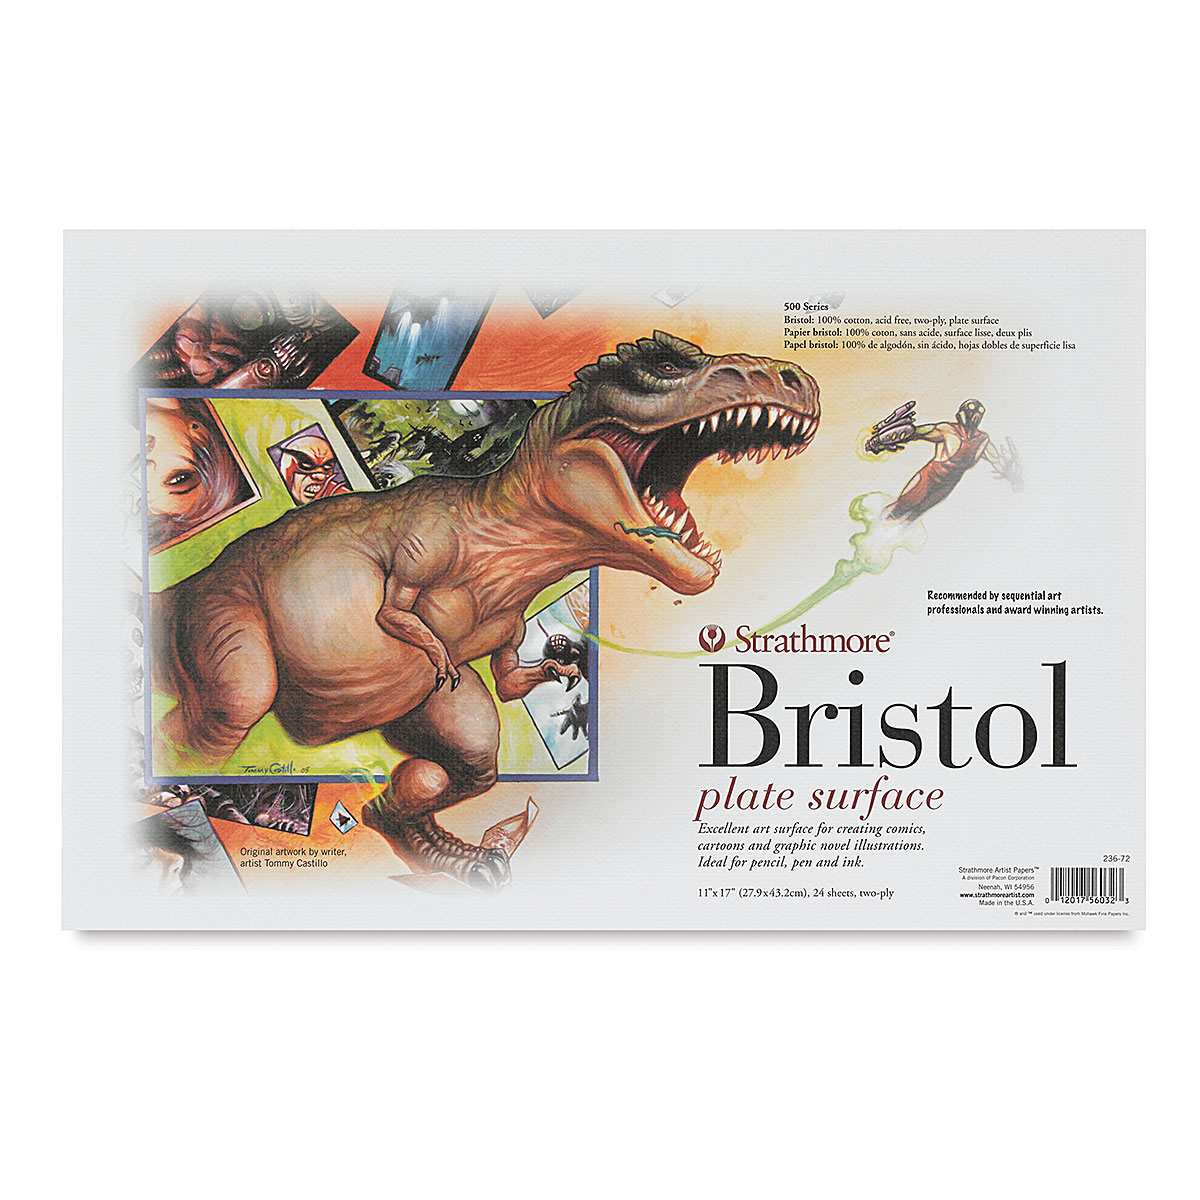 Strathmore Artist Trading Cards, Bristol Smooth 2-1/2 x 3-1/2